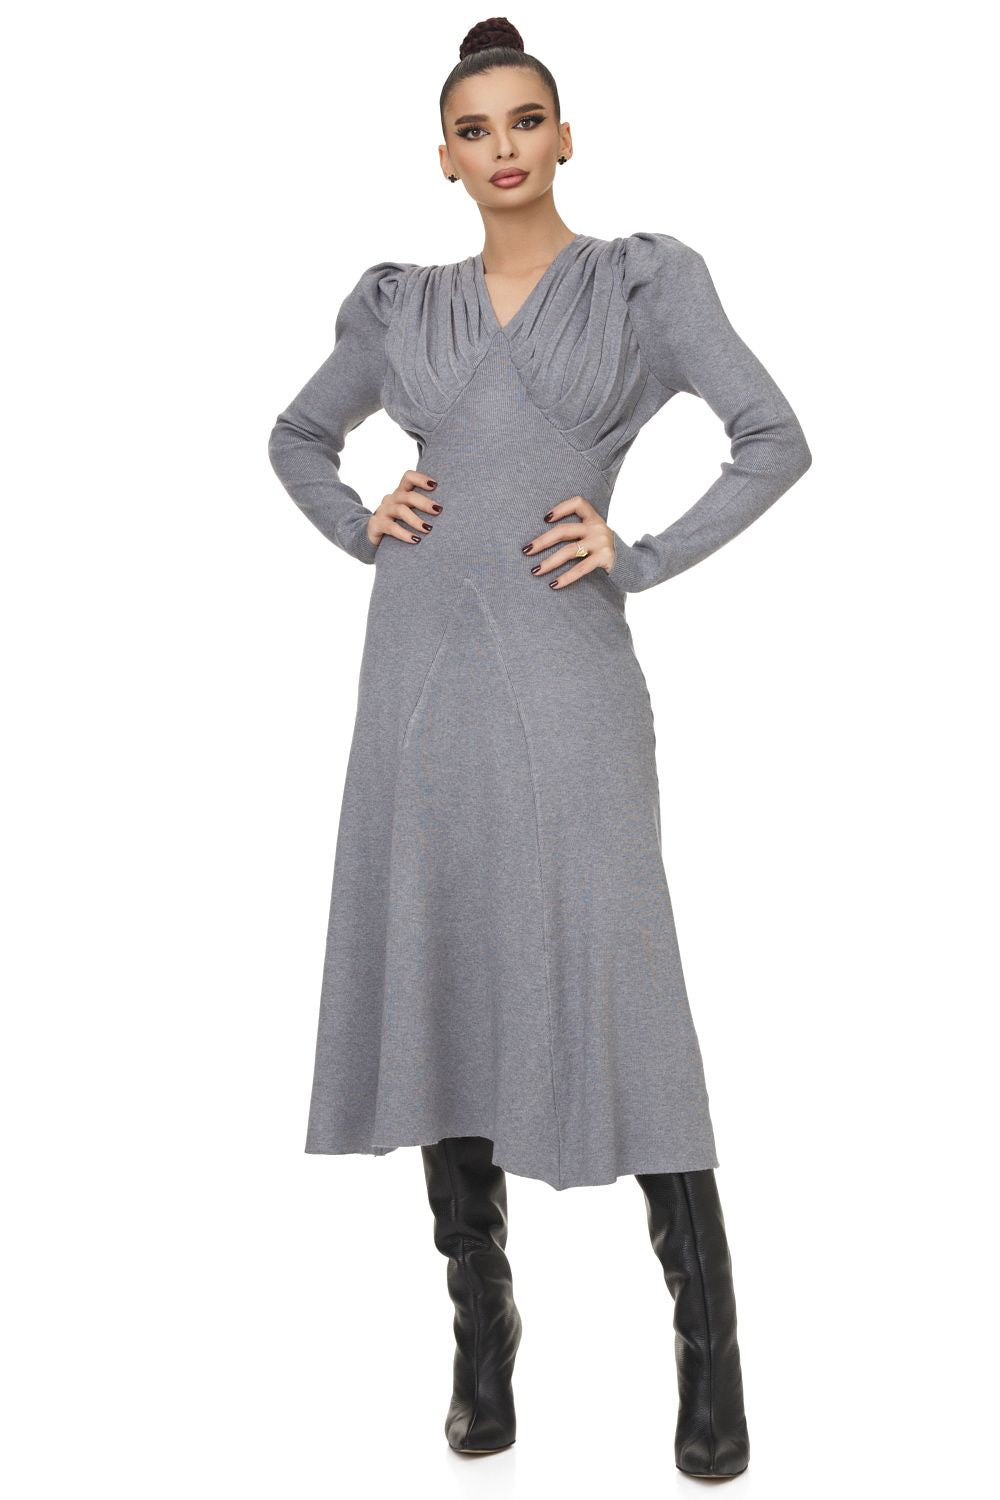 Keresta Bogas grey casual midi dress for women